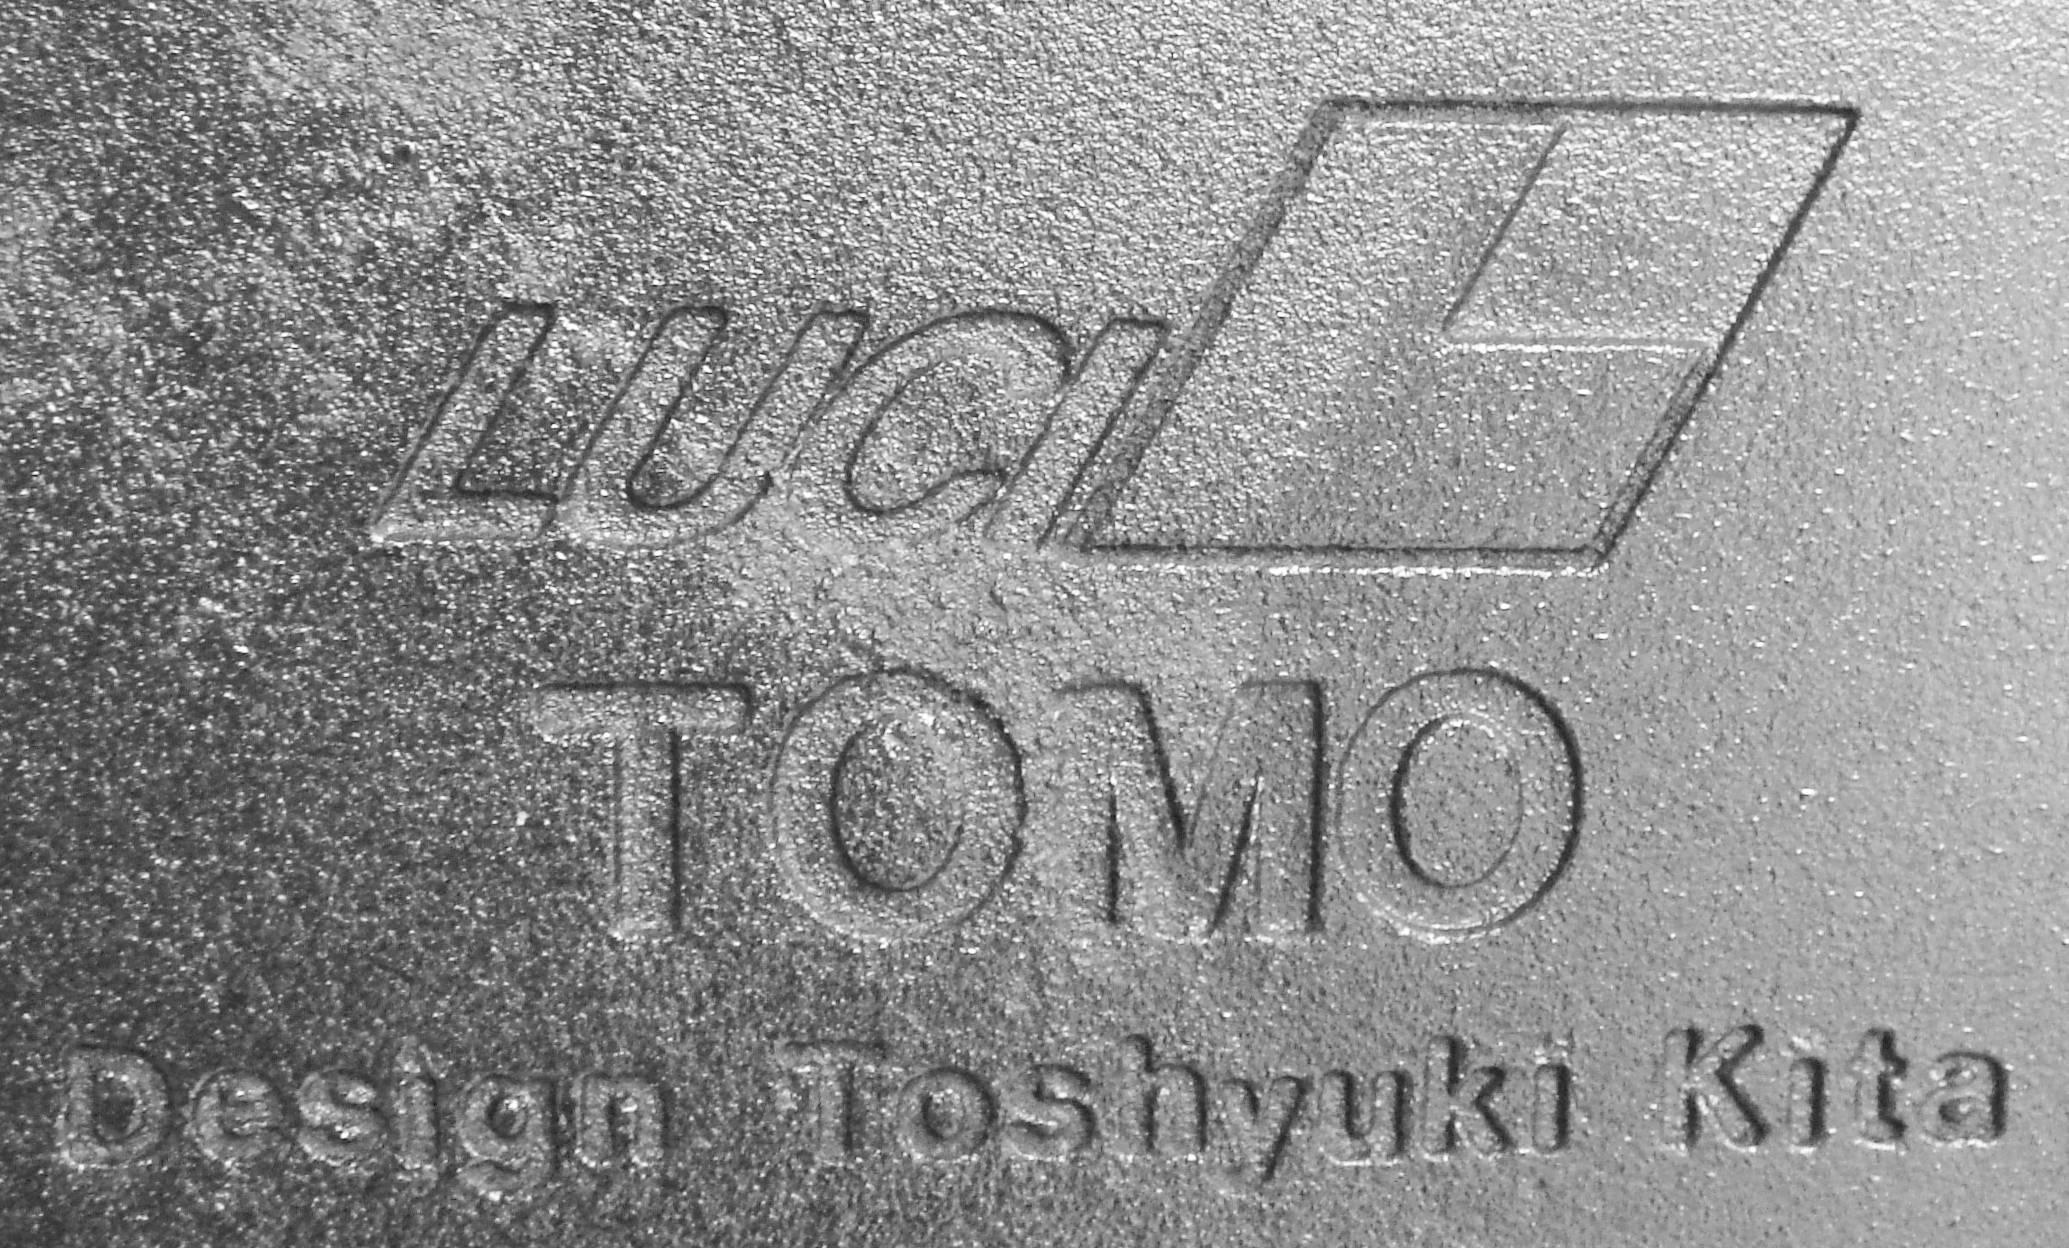 Molded Rare Italian Post-Modern Tomo Floor Lamp by Toshiyuki Kita for Luci